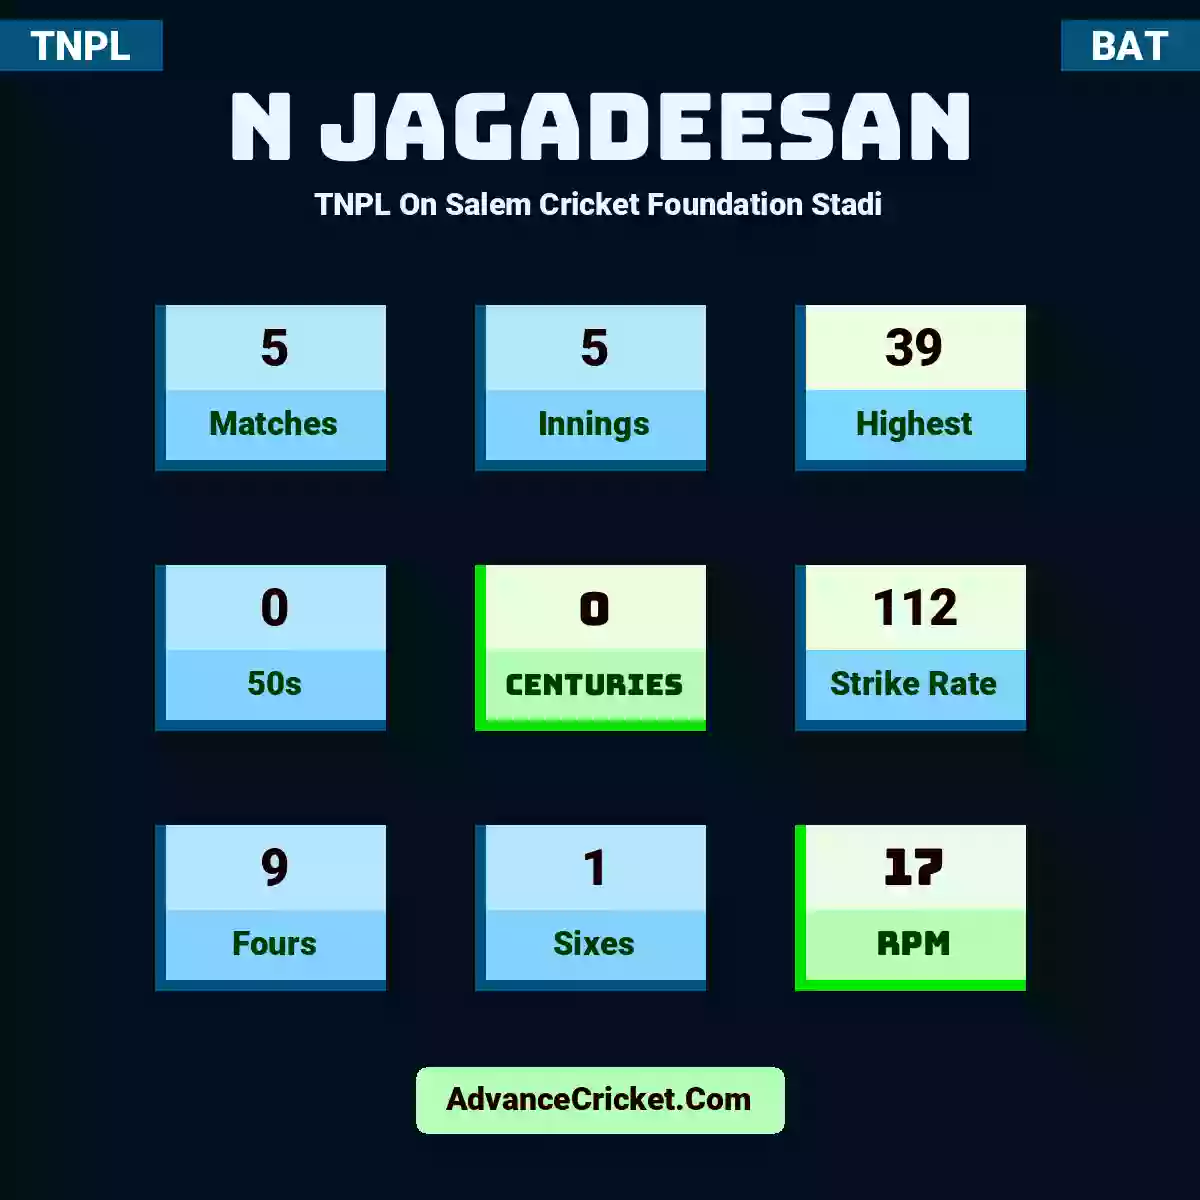 N Jagadeesan TNPL  On Salem Cricket Foundation Stadi, N Jagadeesan played 5 matches, scored 39 runs as highest, 0 half-centuries, and 0 centuries, with a strike rate of 112. N.Jagadeesan hit 9 fours and 1 sixes, with an RPM of 17.